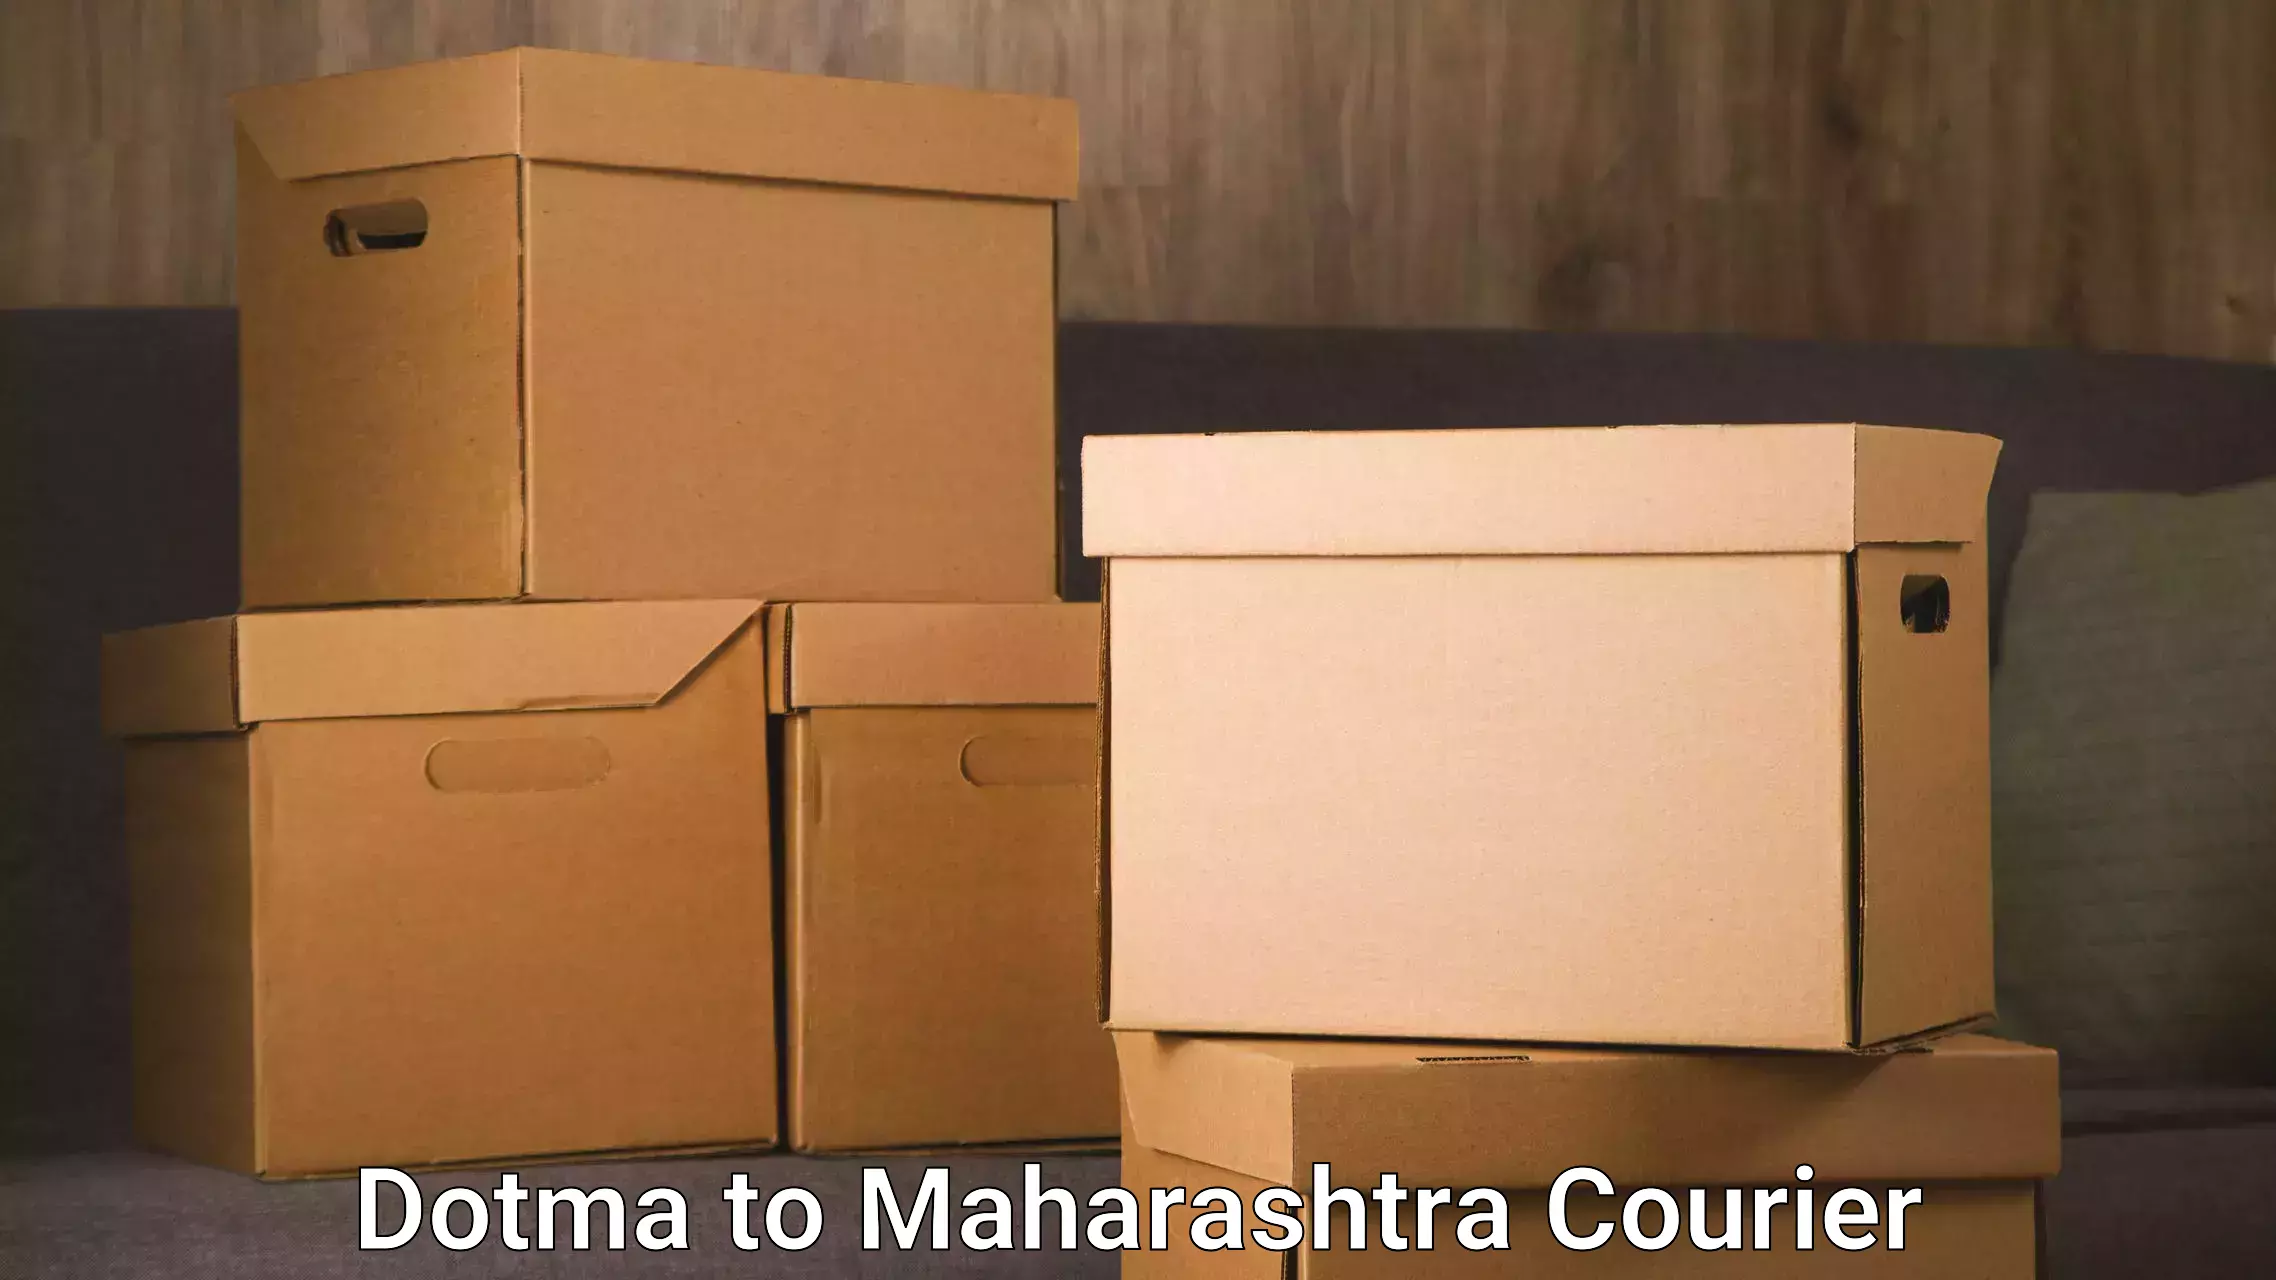 Urgent courier needs Dotma to Mumbai